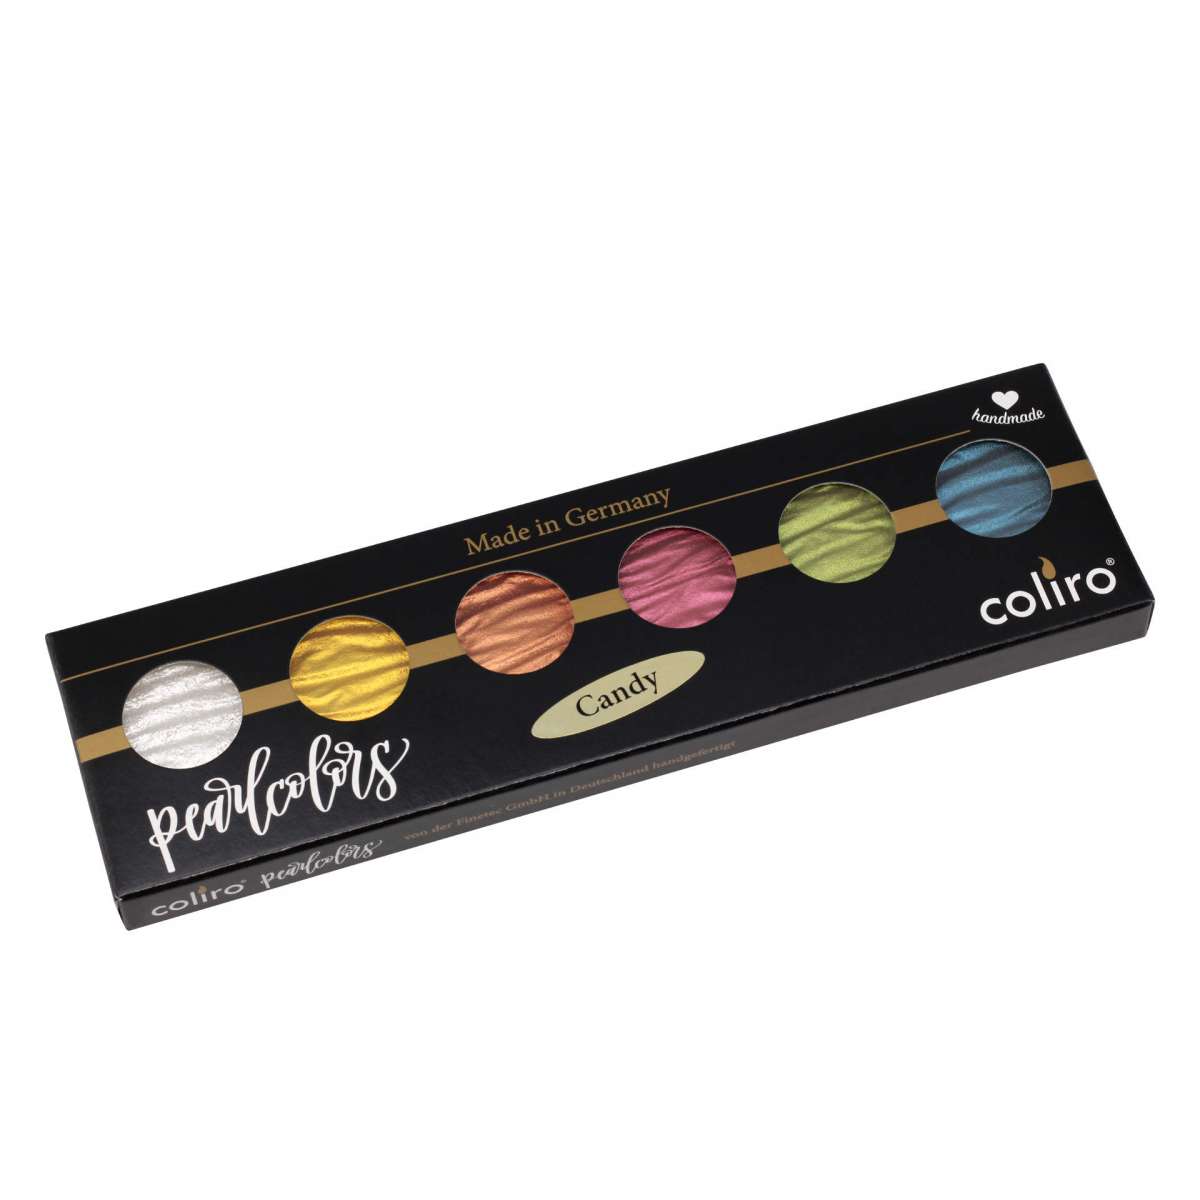 Coliro 'Candy' Pearlcolour Set